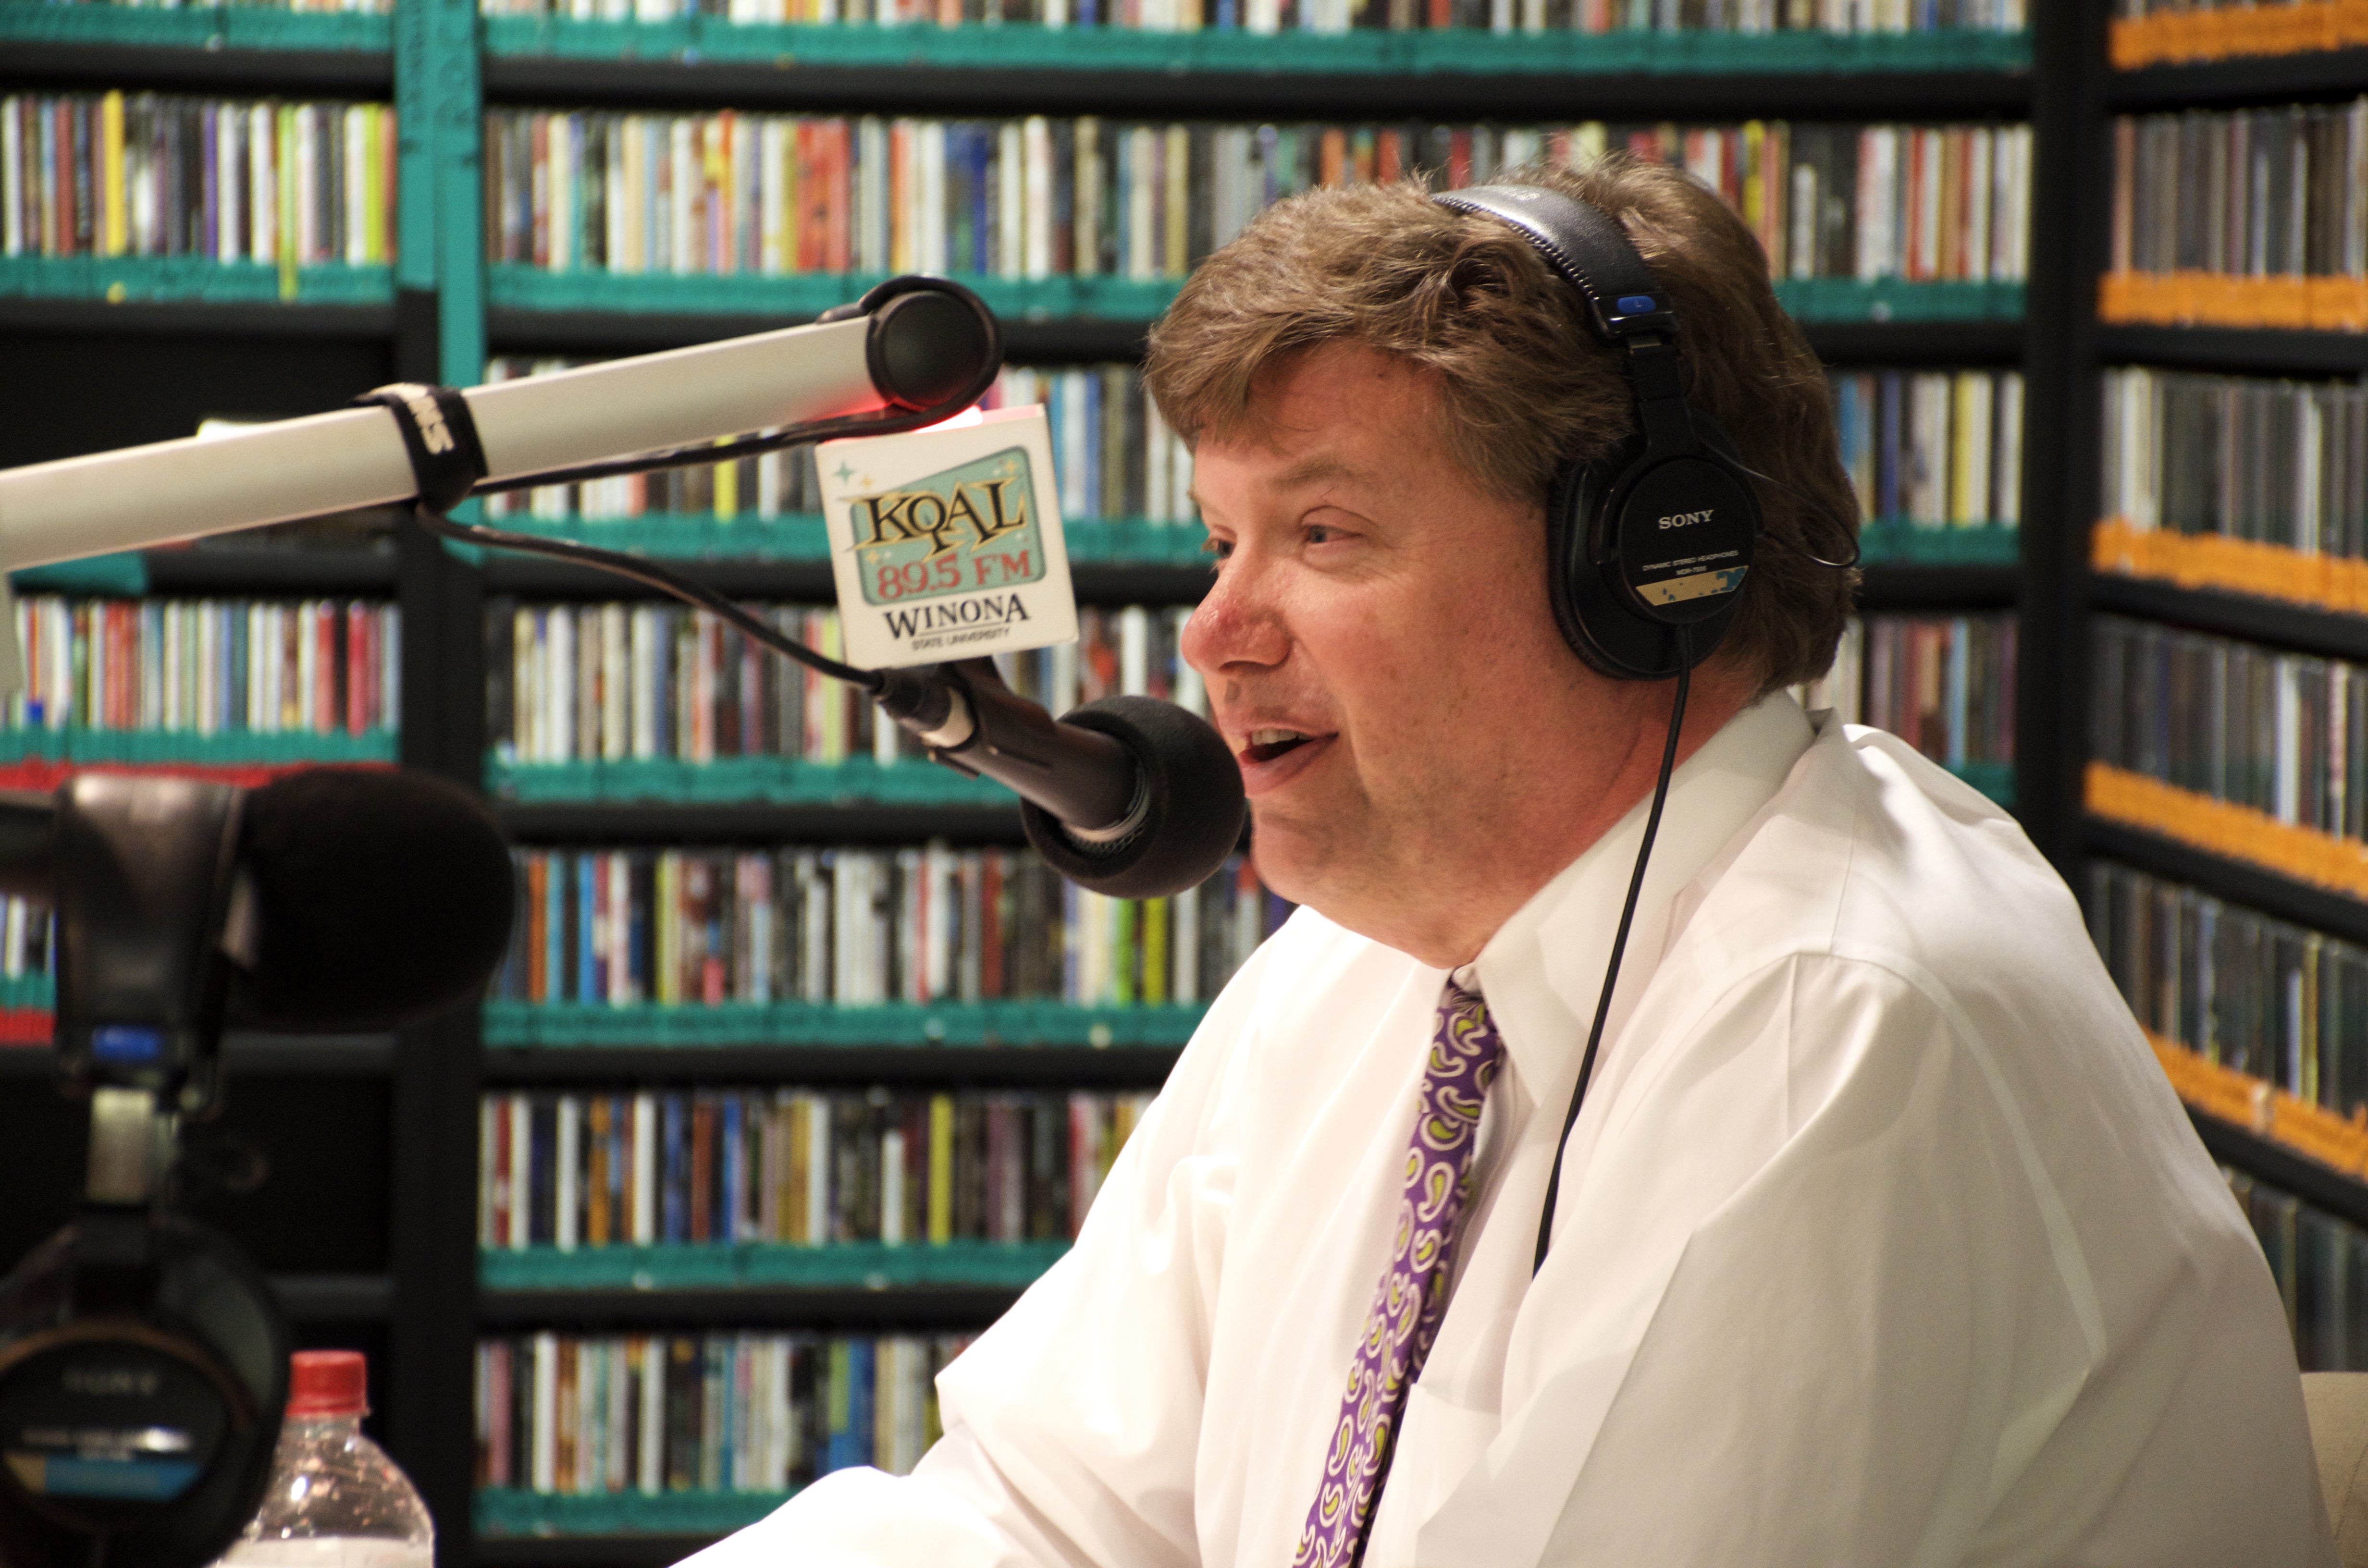 WSU President Olson to Host Groovy Radio Show